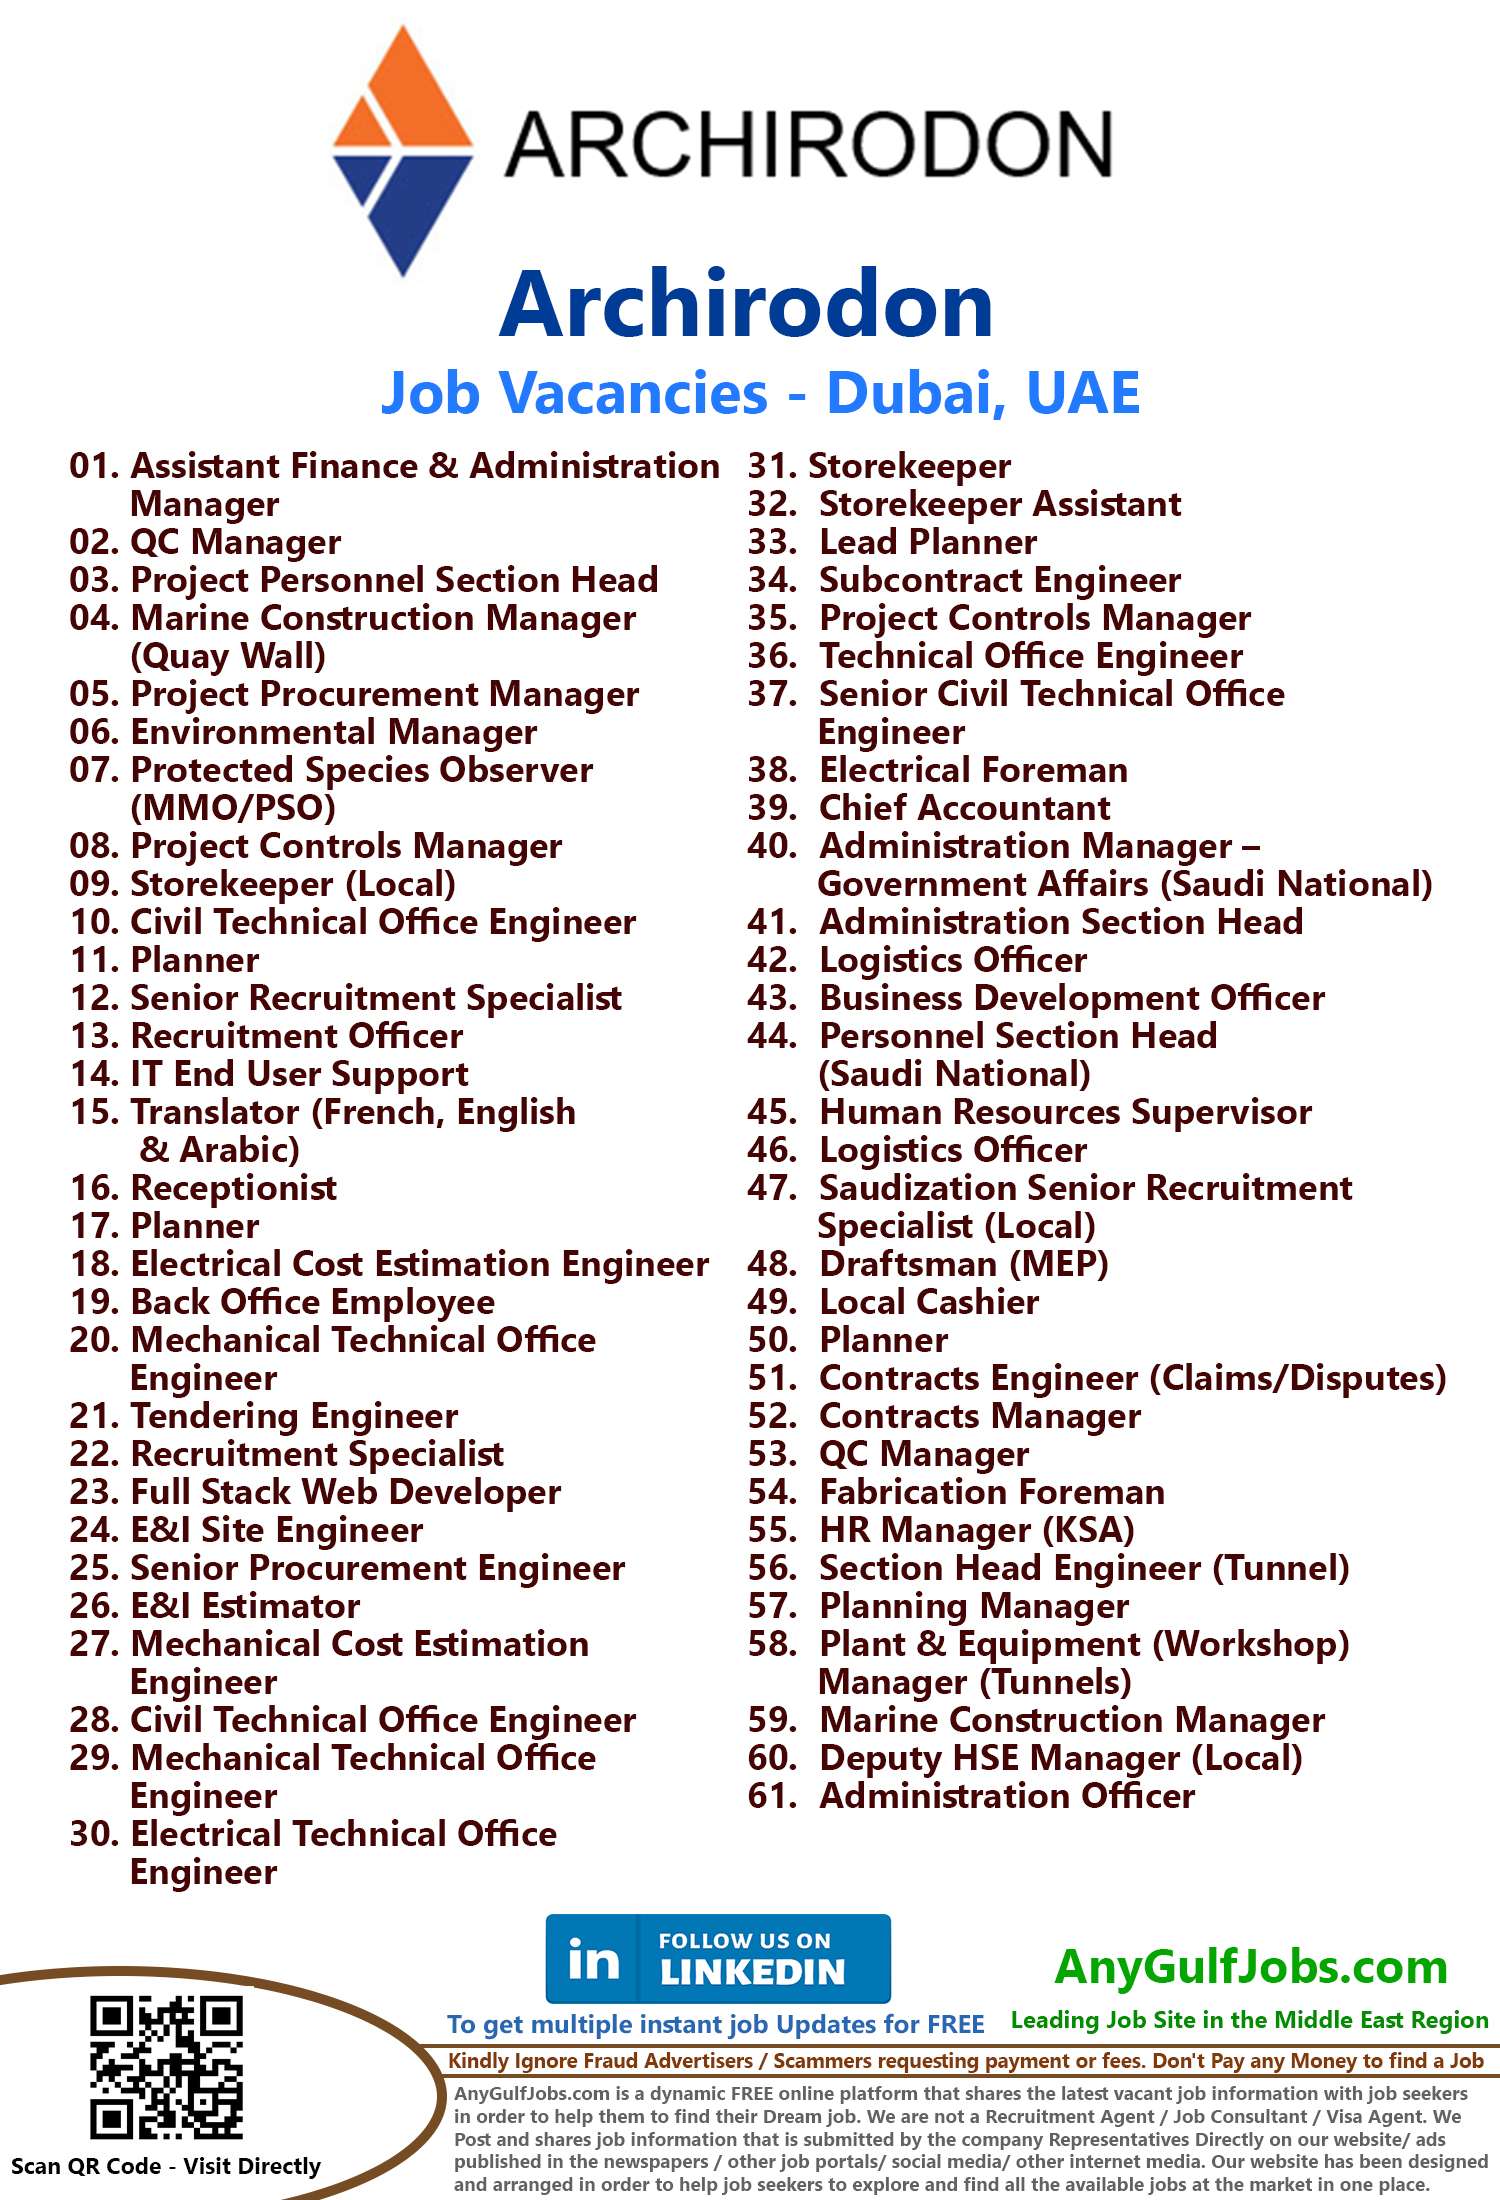 Archirodon Job Vacancies - Dubai, UAE